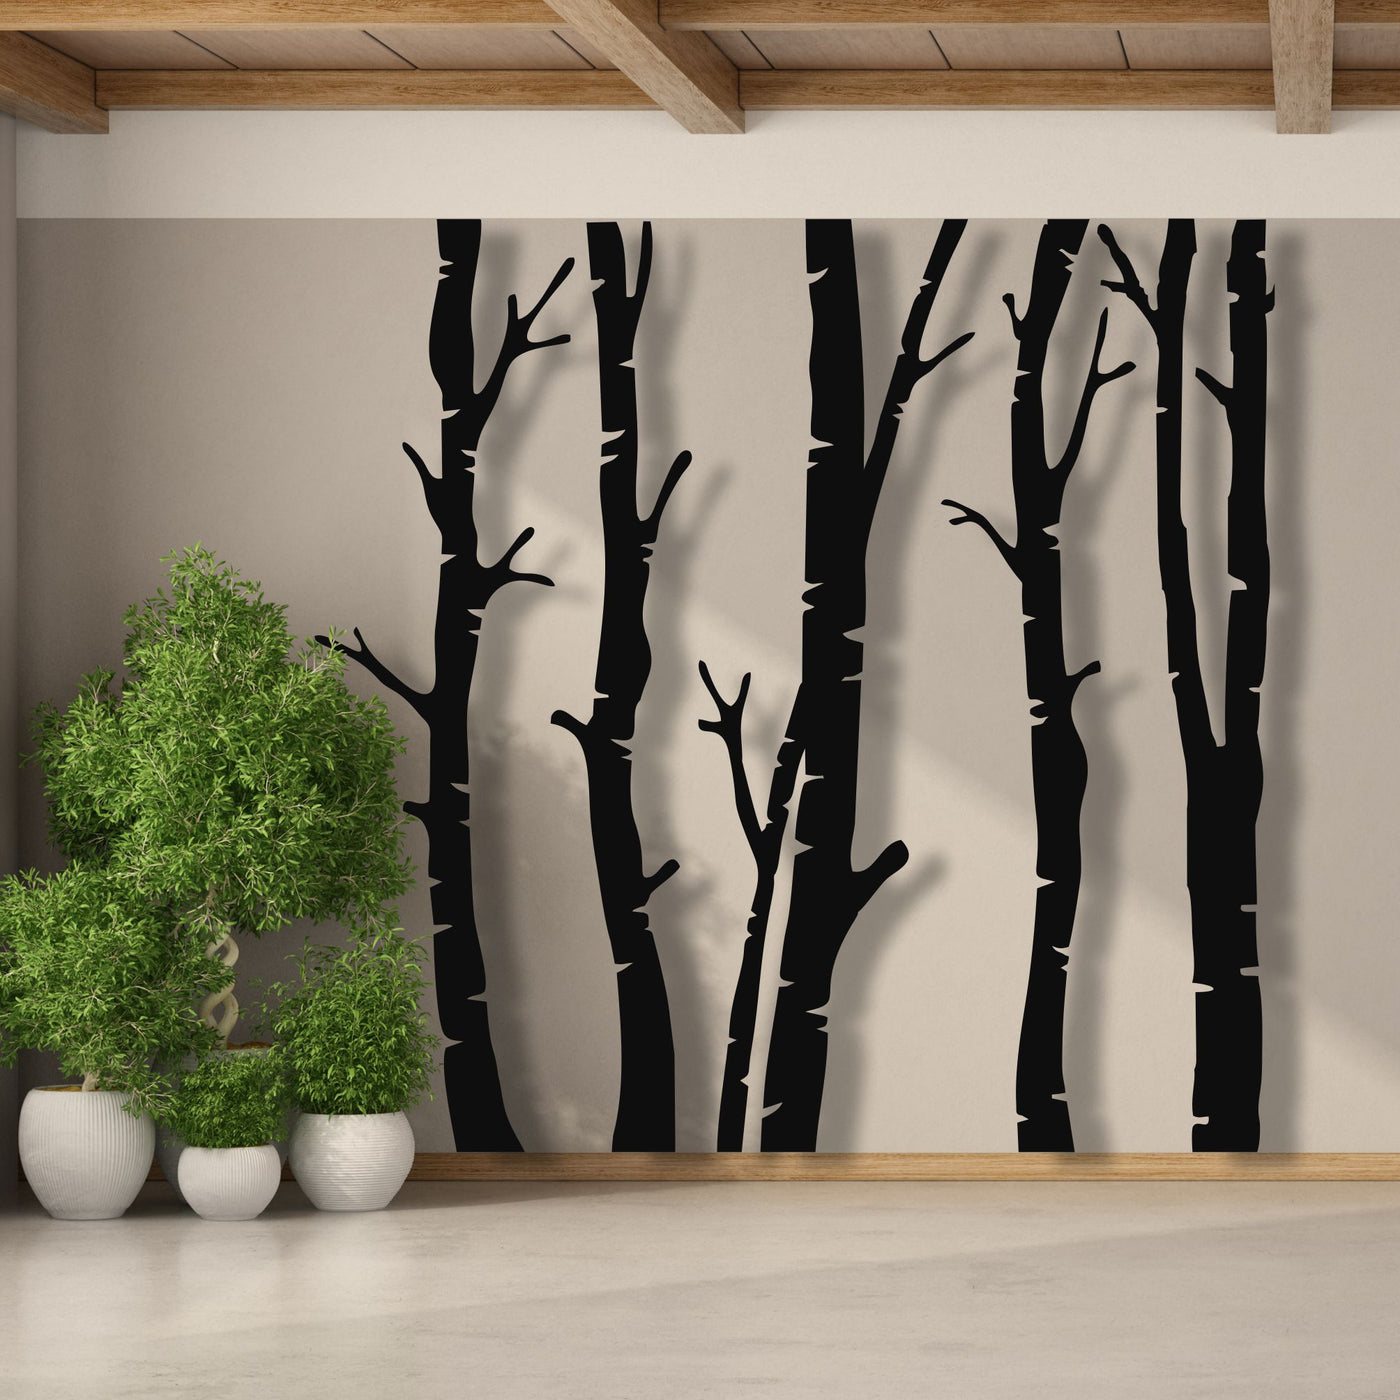 5 Trees Metal Wall Art